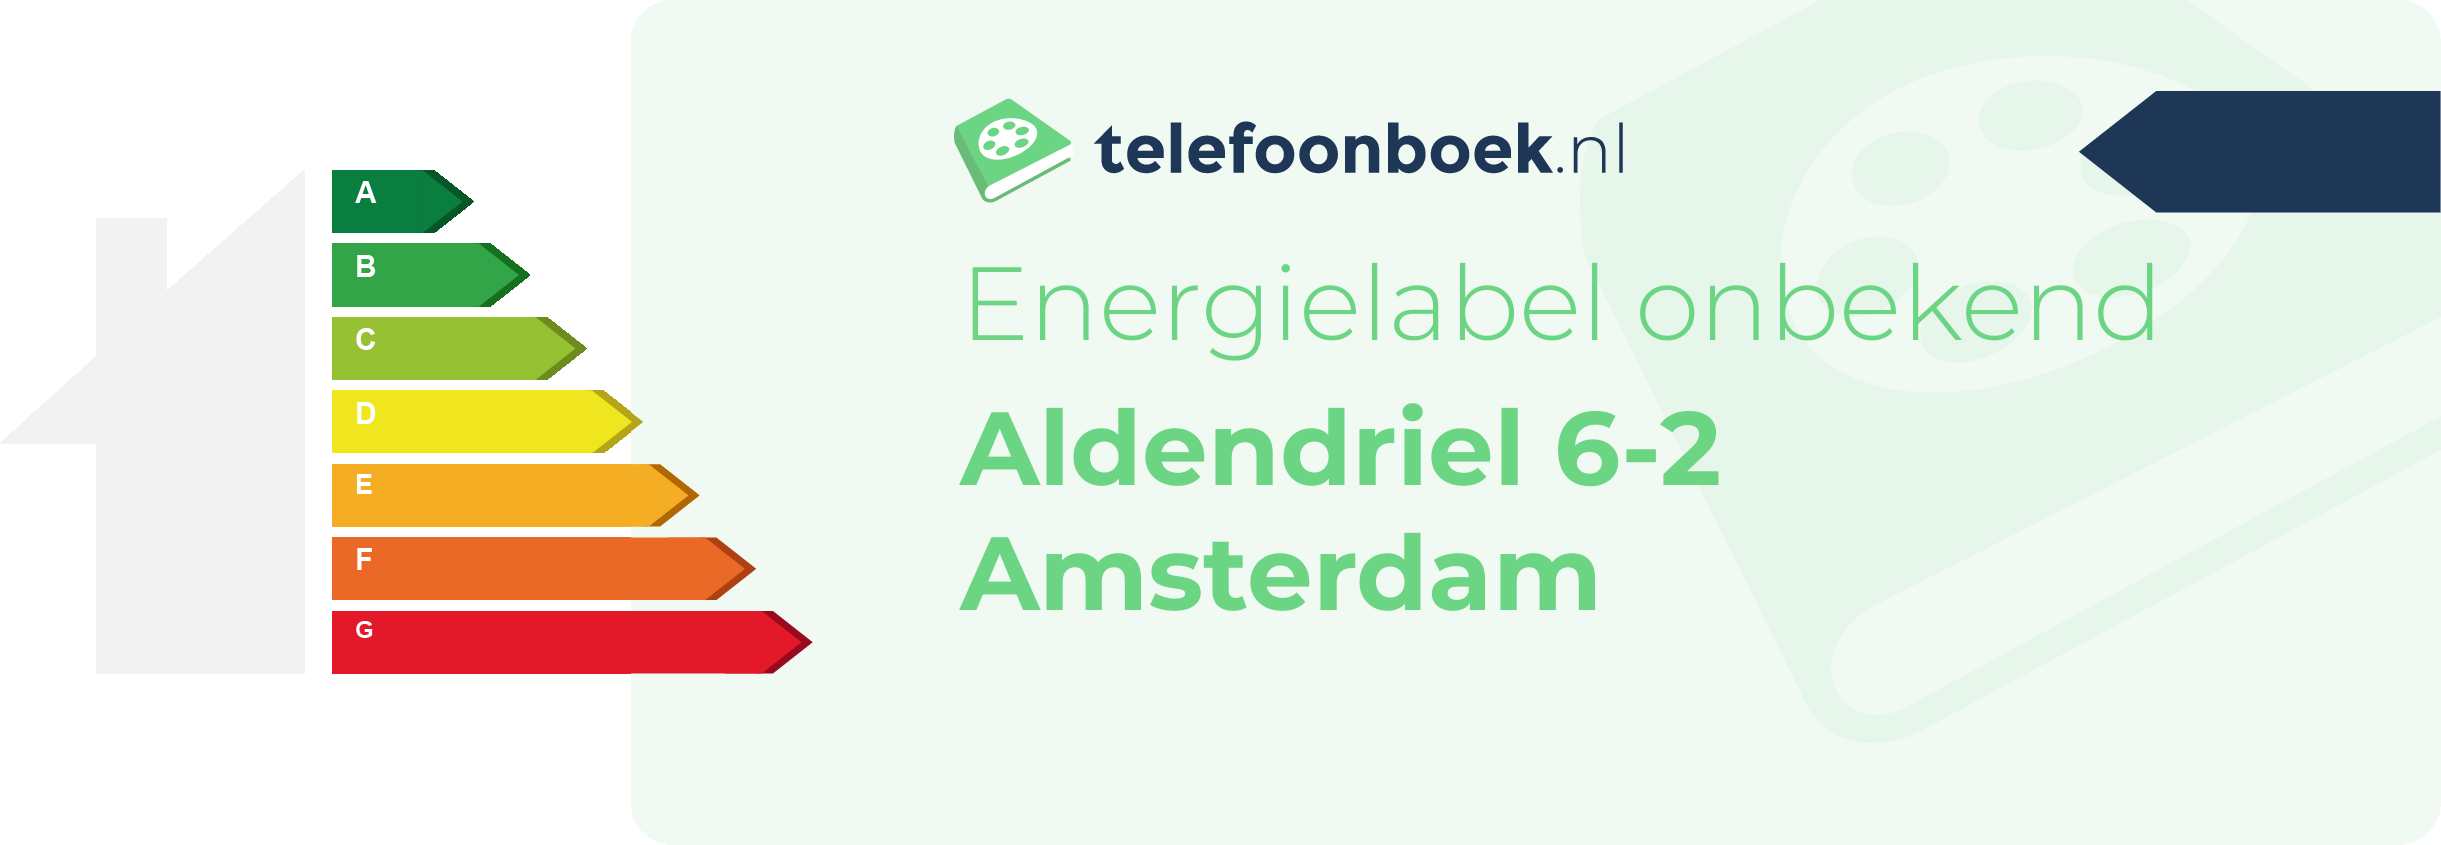 Energielabel Aldendriel 6-2 Amsterdam